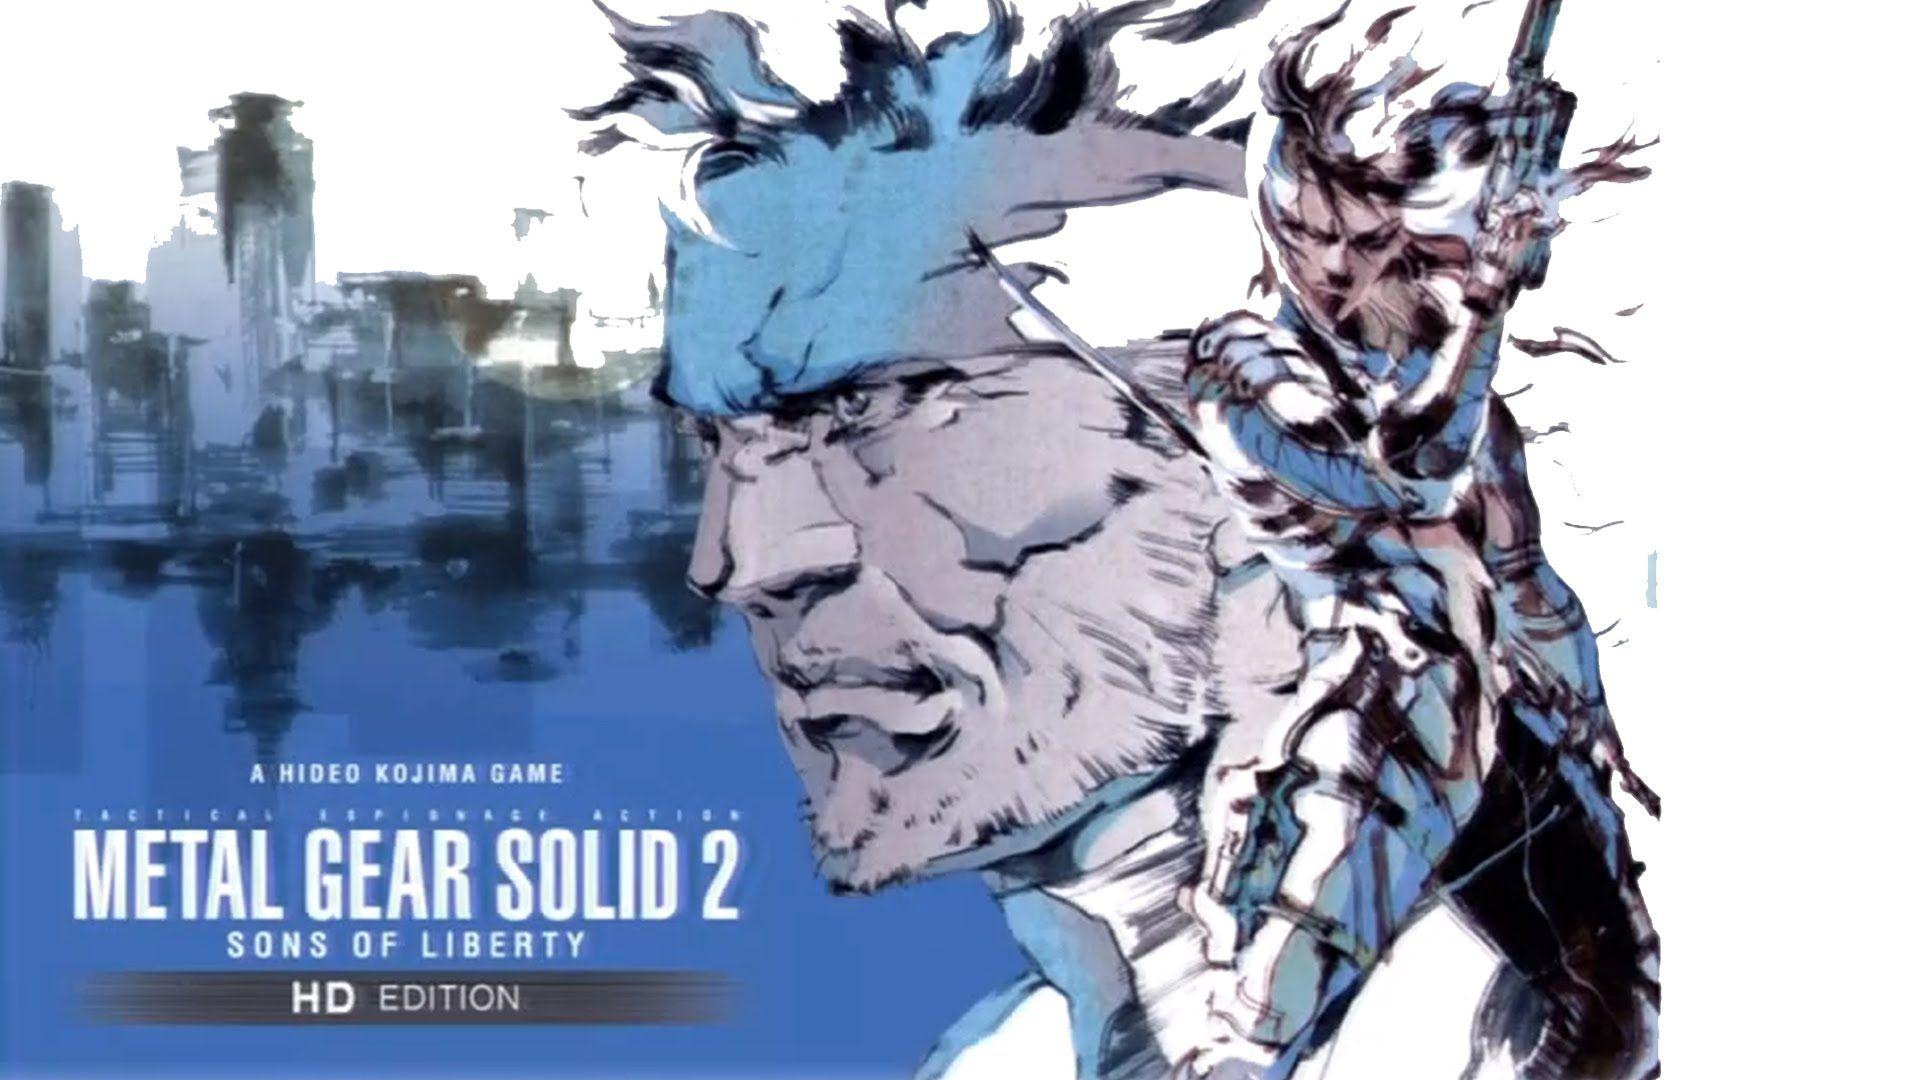 Metal Gear Solid 2 - Wallpaper HD Edition 001